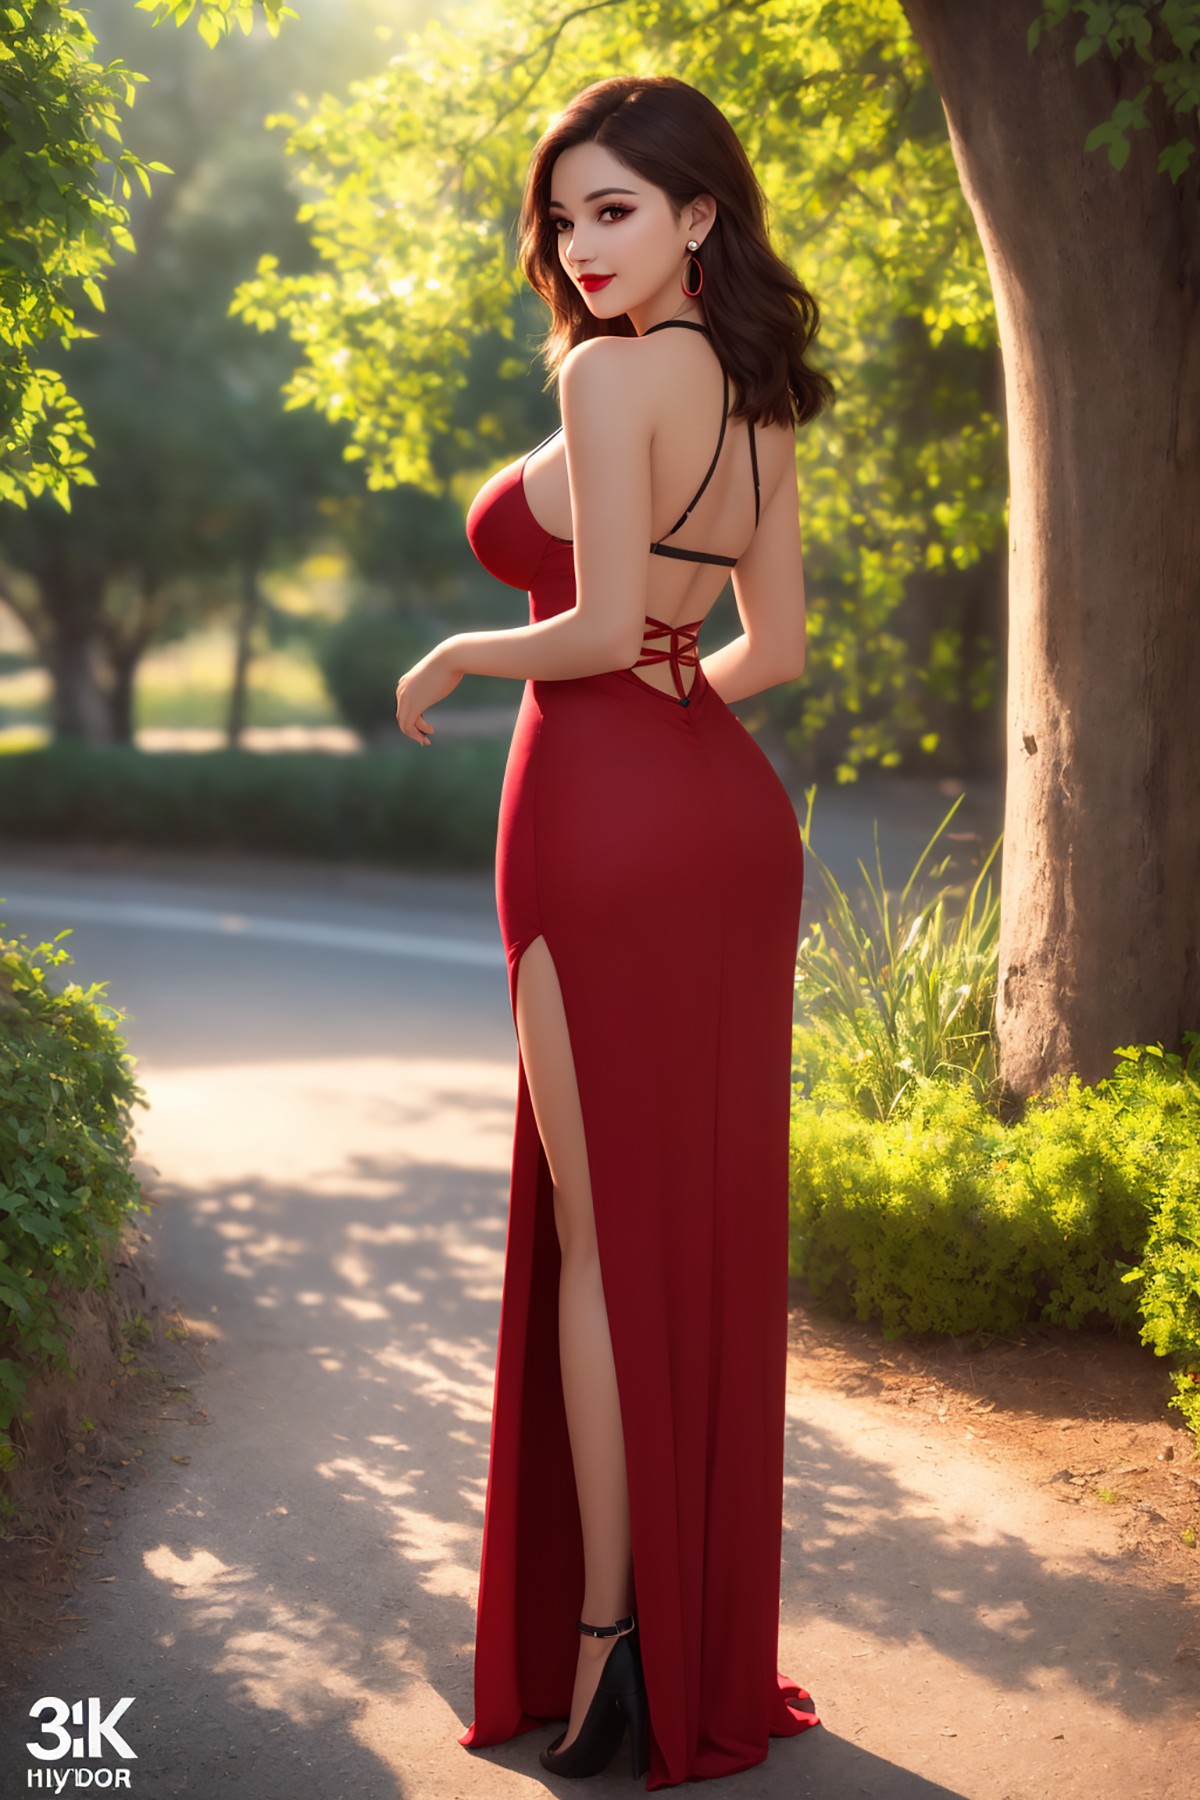 AIModel Vol 155 Red Dress Sexy 0001 3706151622.jpg